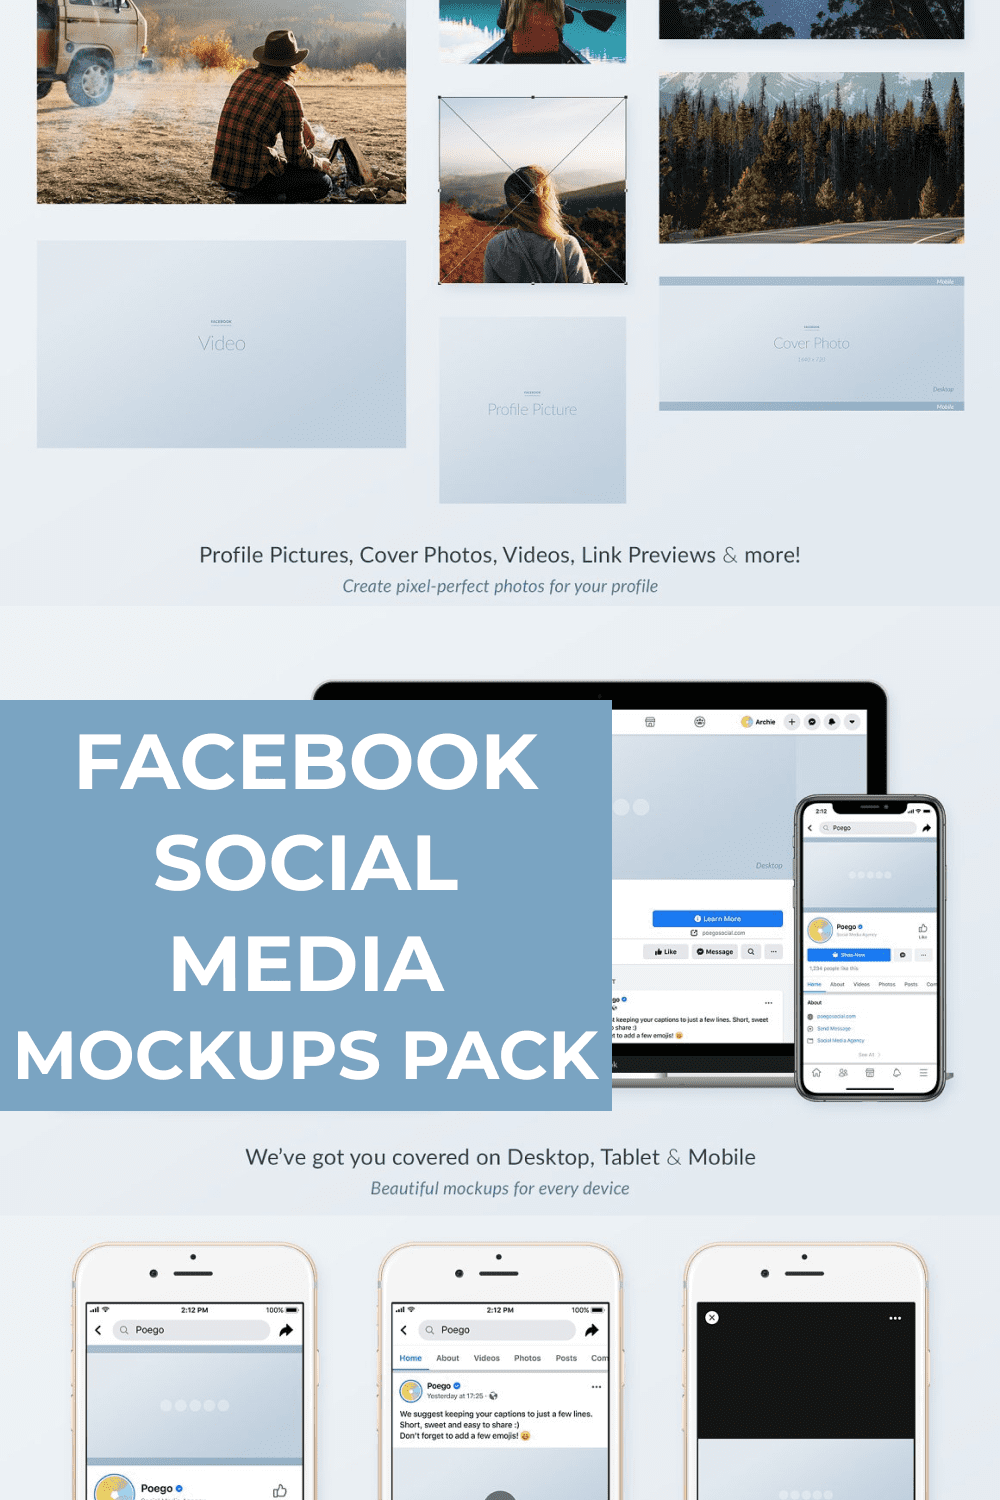 Facebook Social Media Mockups Pack - Pinterest.